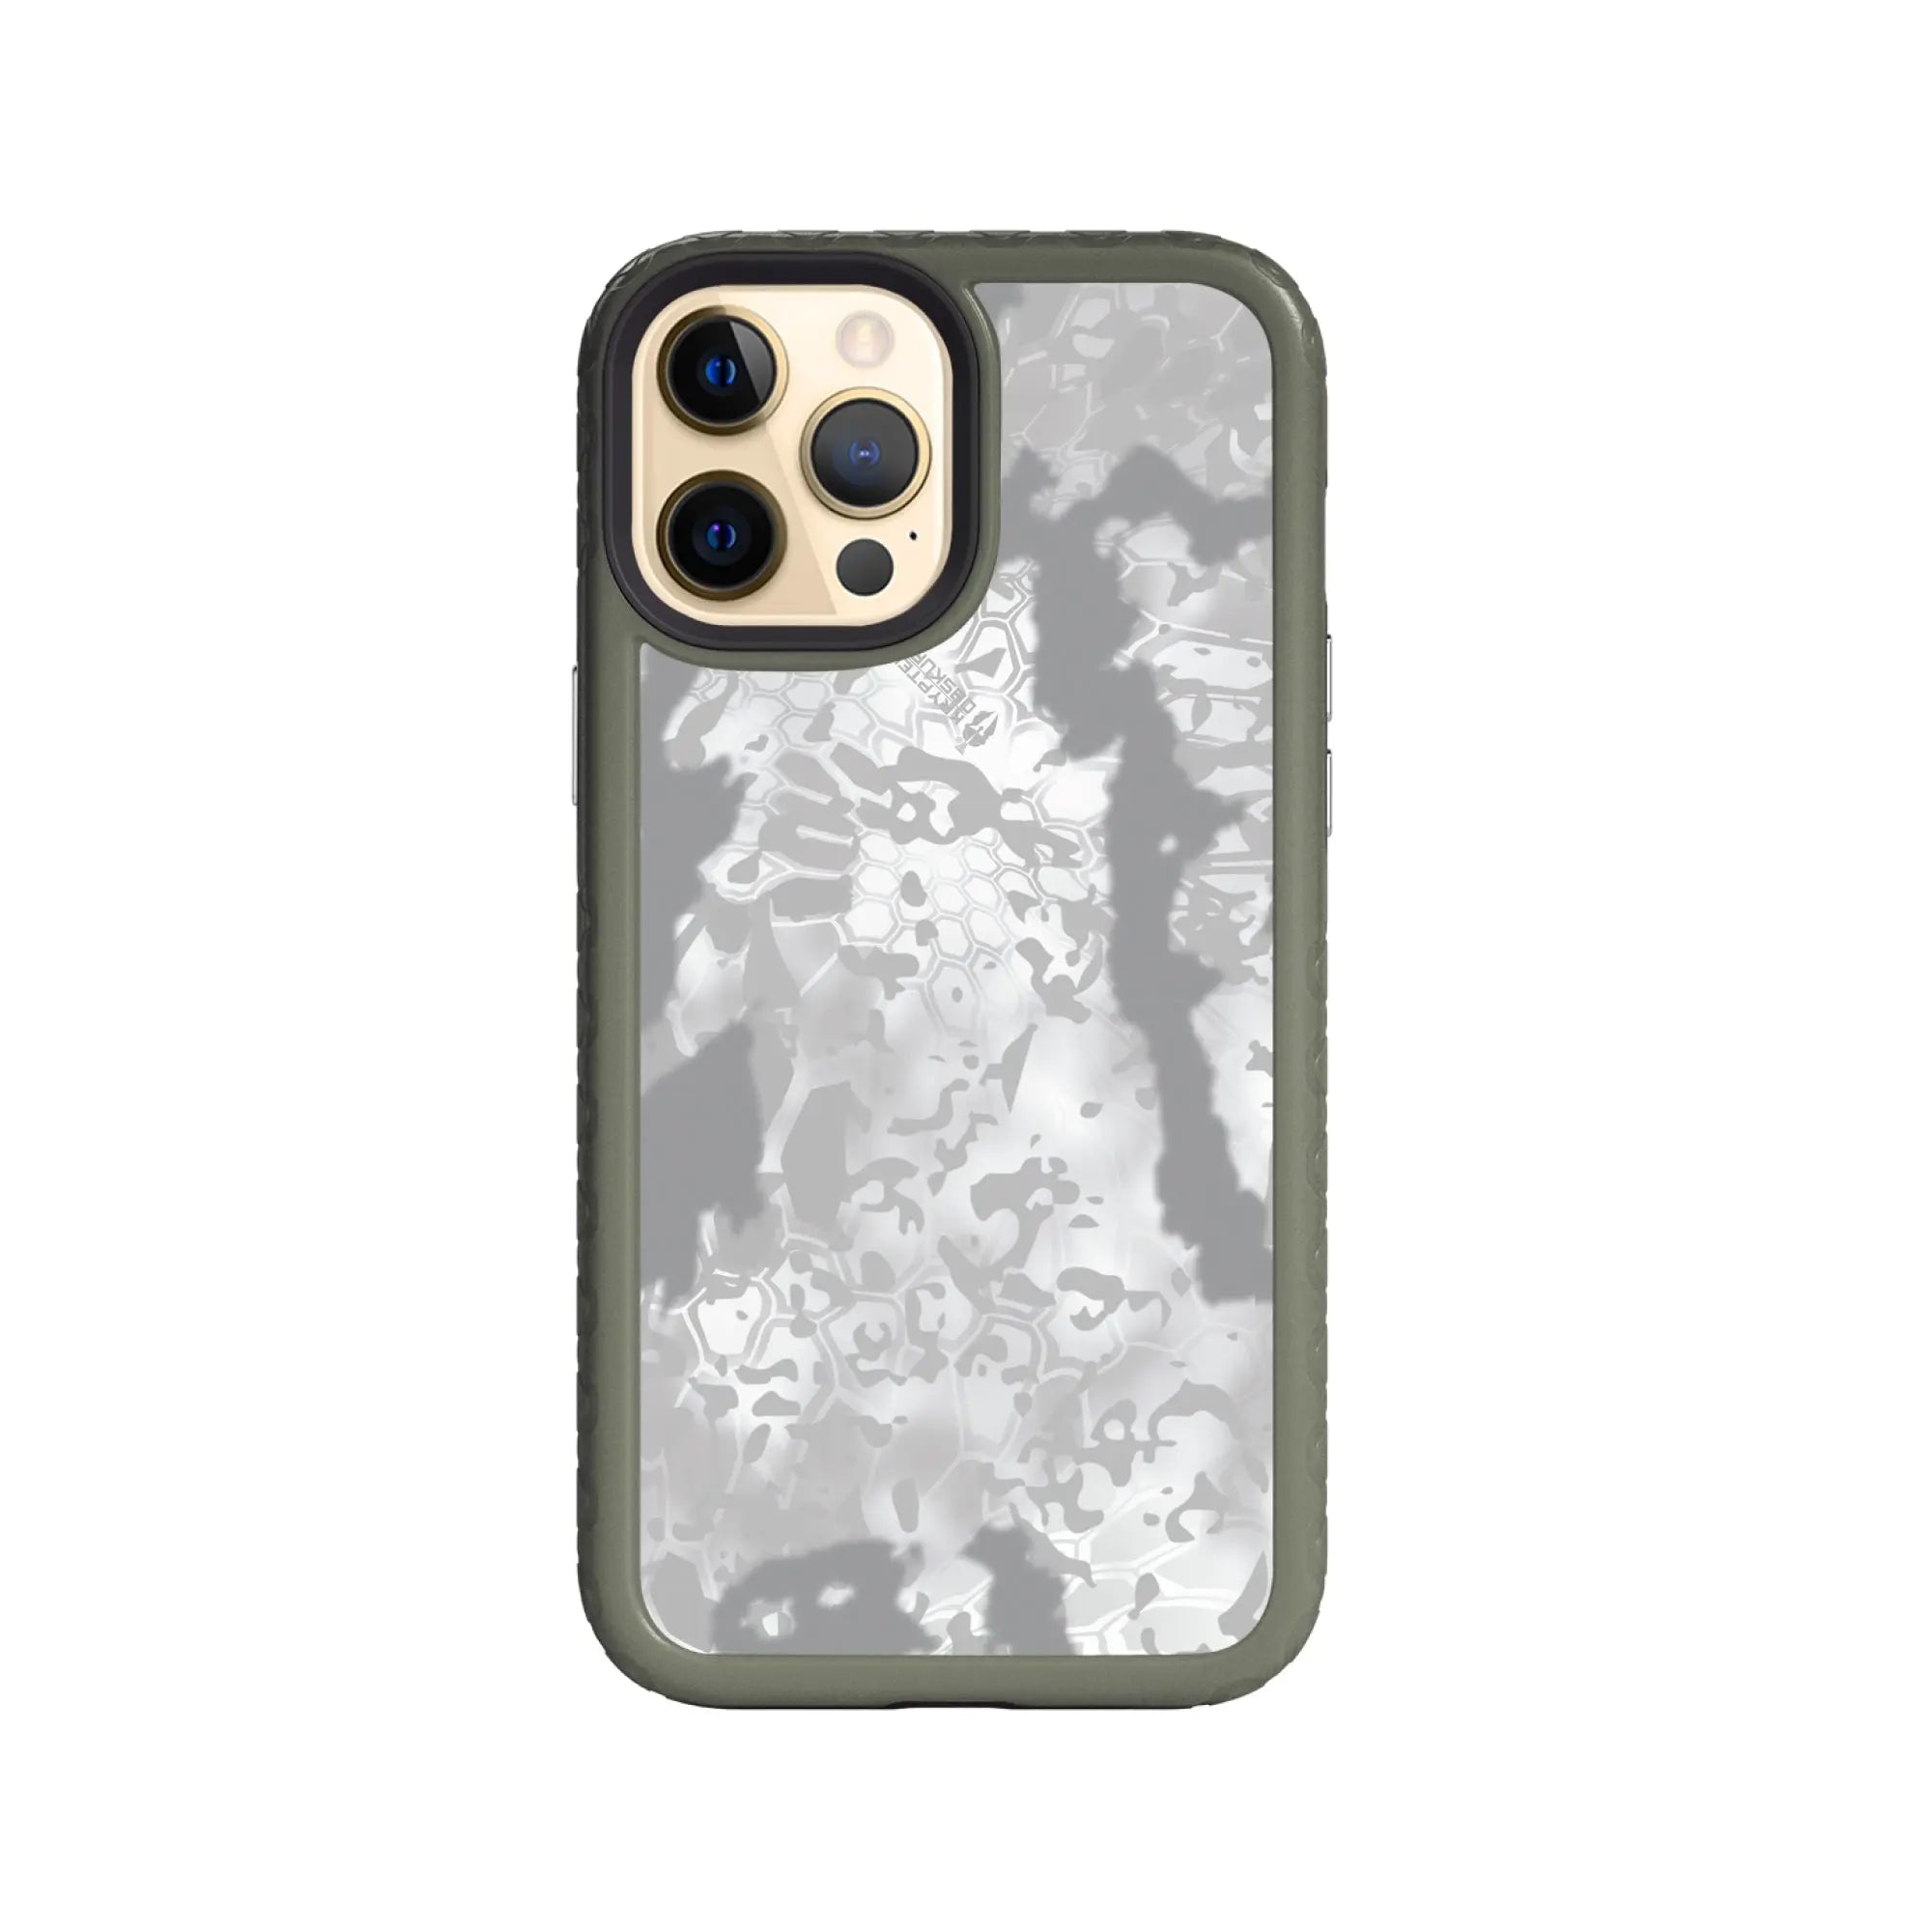 Kryptek Fortitude for Apple iPhone 12 Pro Max - Custom Case - OliveDrabGreenOBSKURANIVIS - cellhelmet